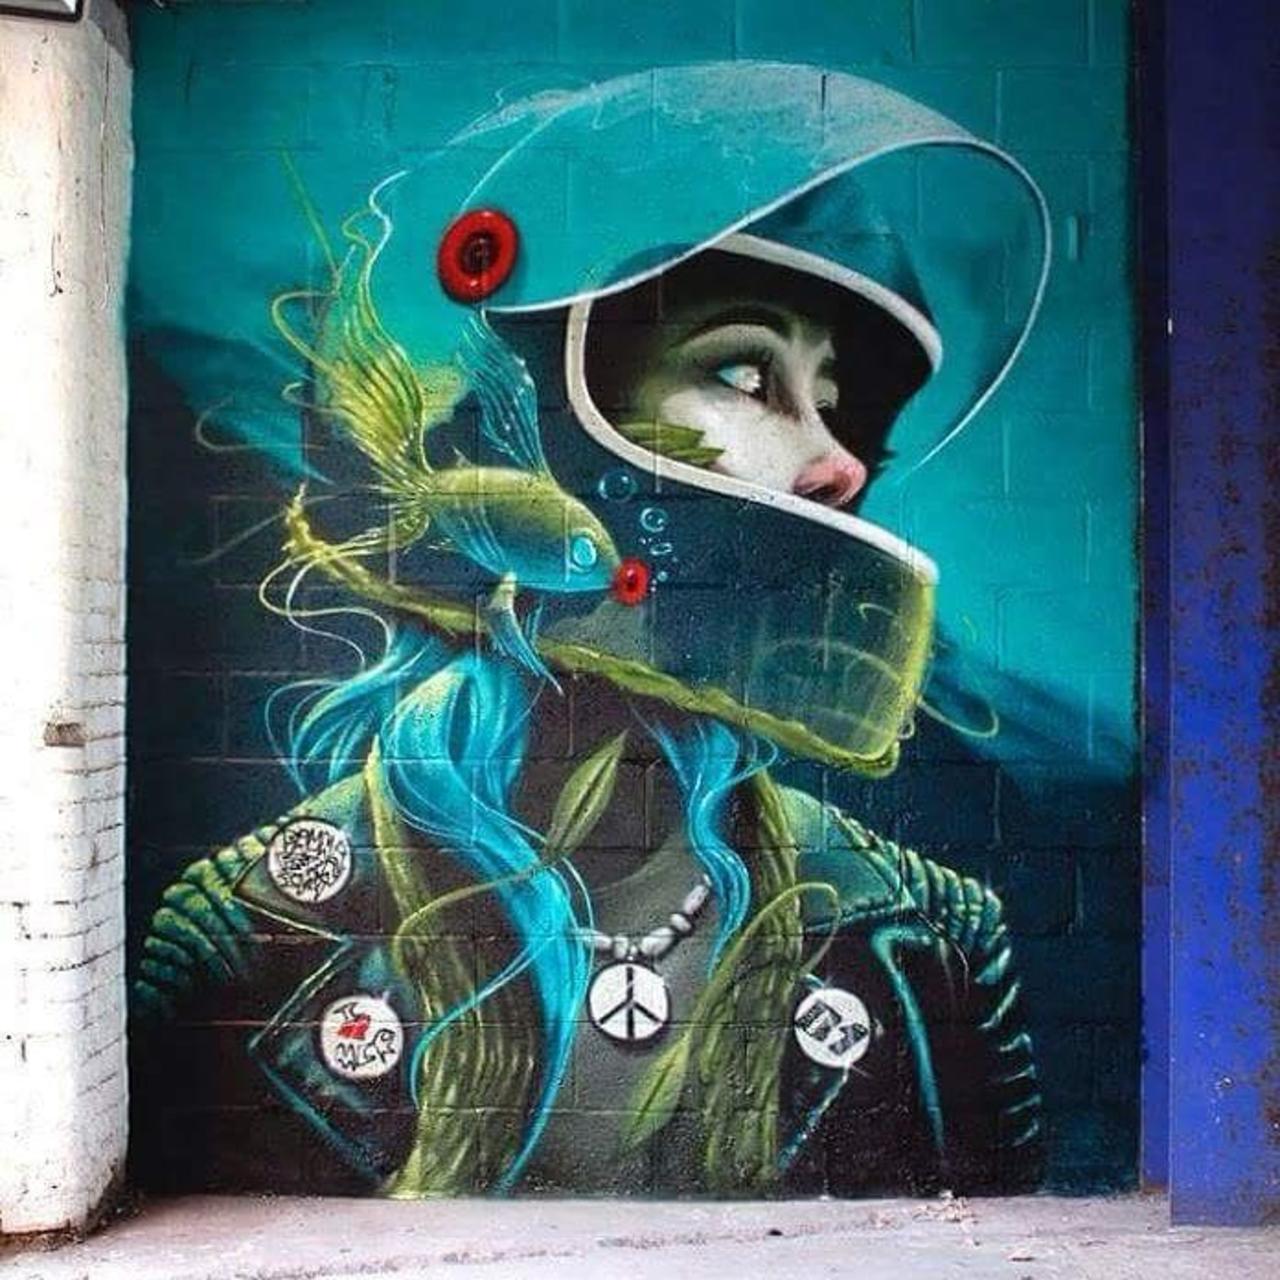 RT @hypatia373: #art #streetart #graffiti 
#Rocket01 http://t.co/PlNUyMkxqe